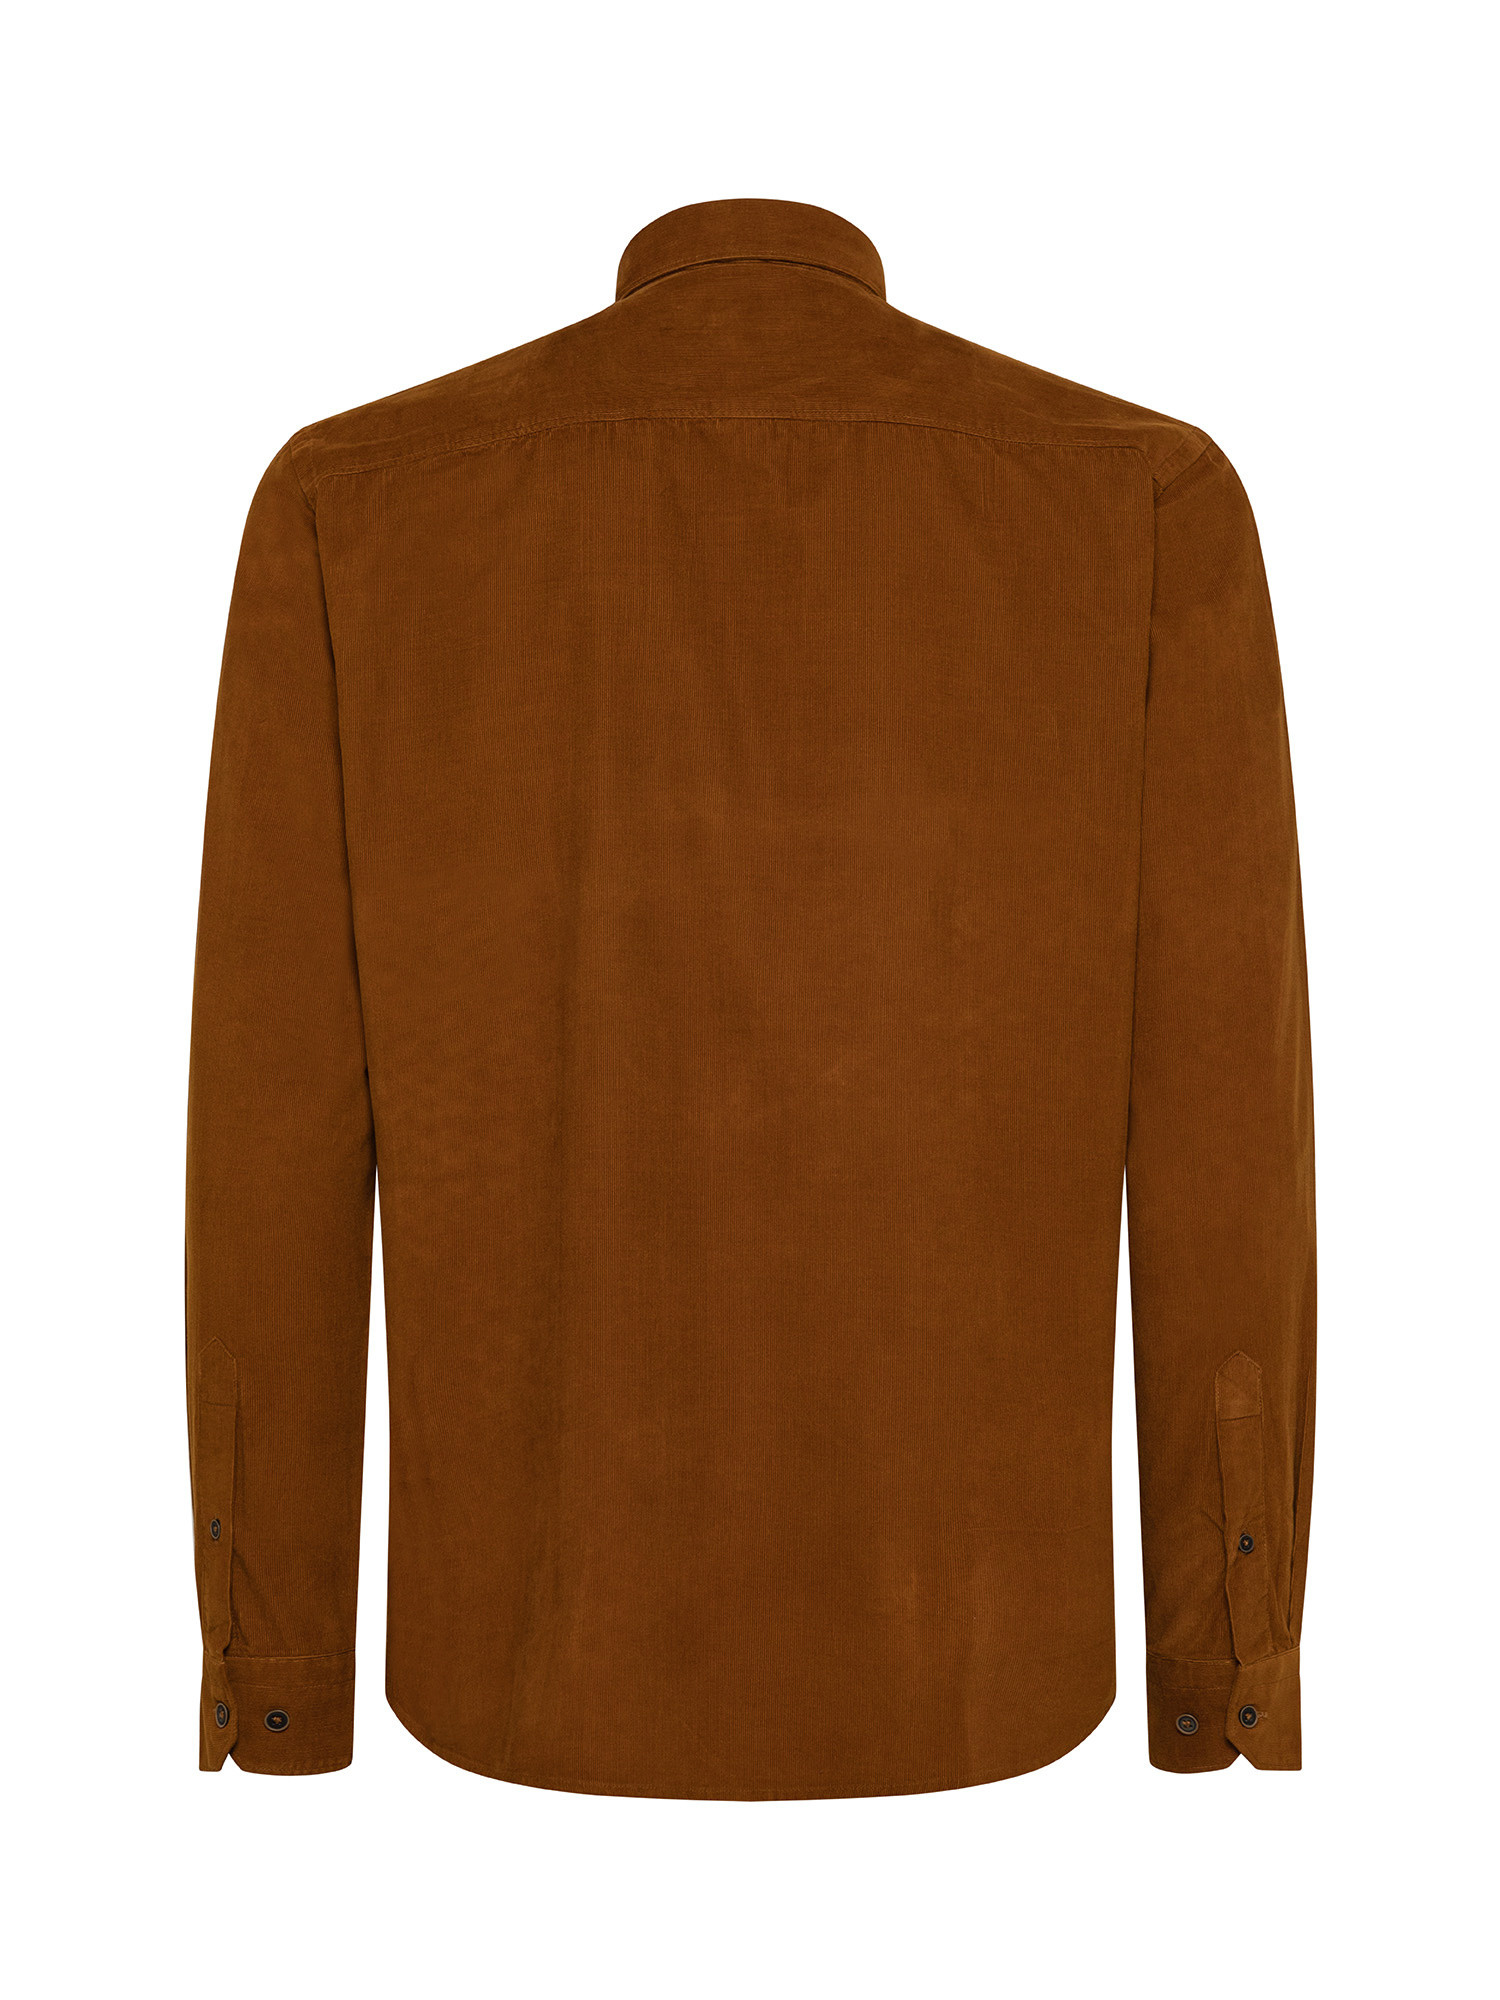 JCT - Cotton velvet shirt, Copper Brown, large image number 1